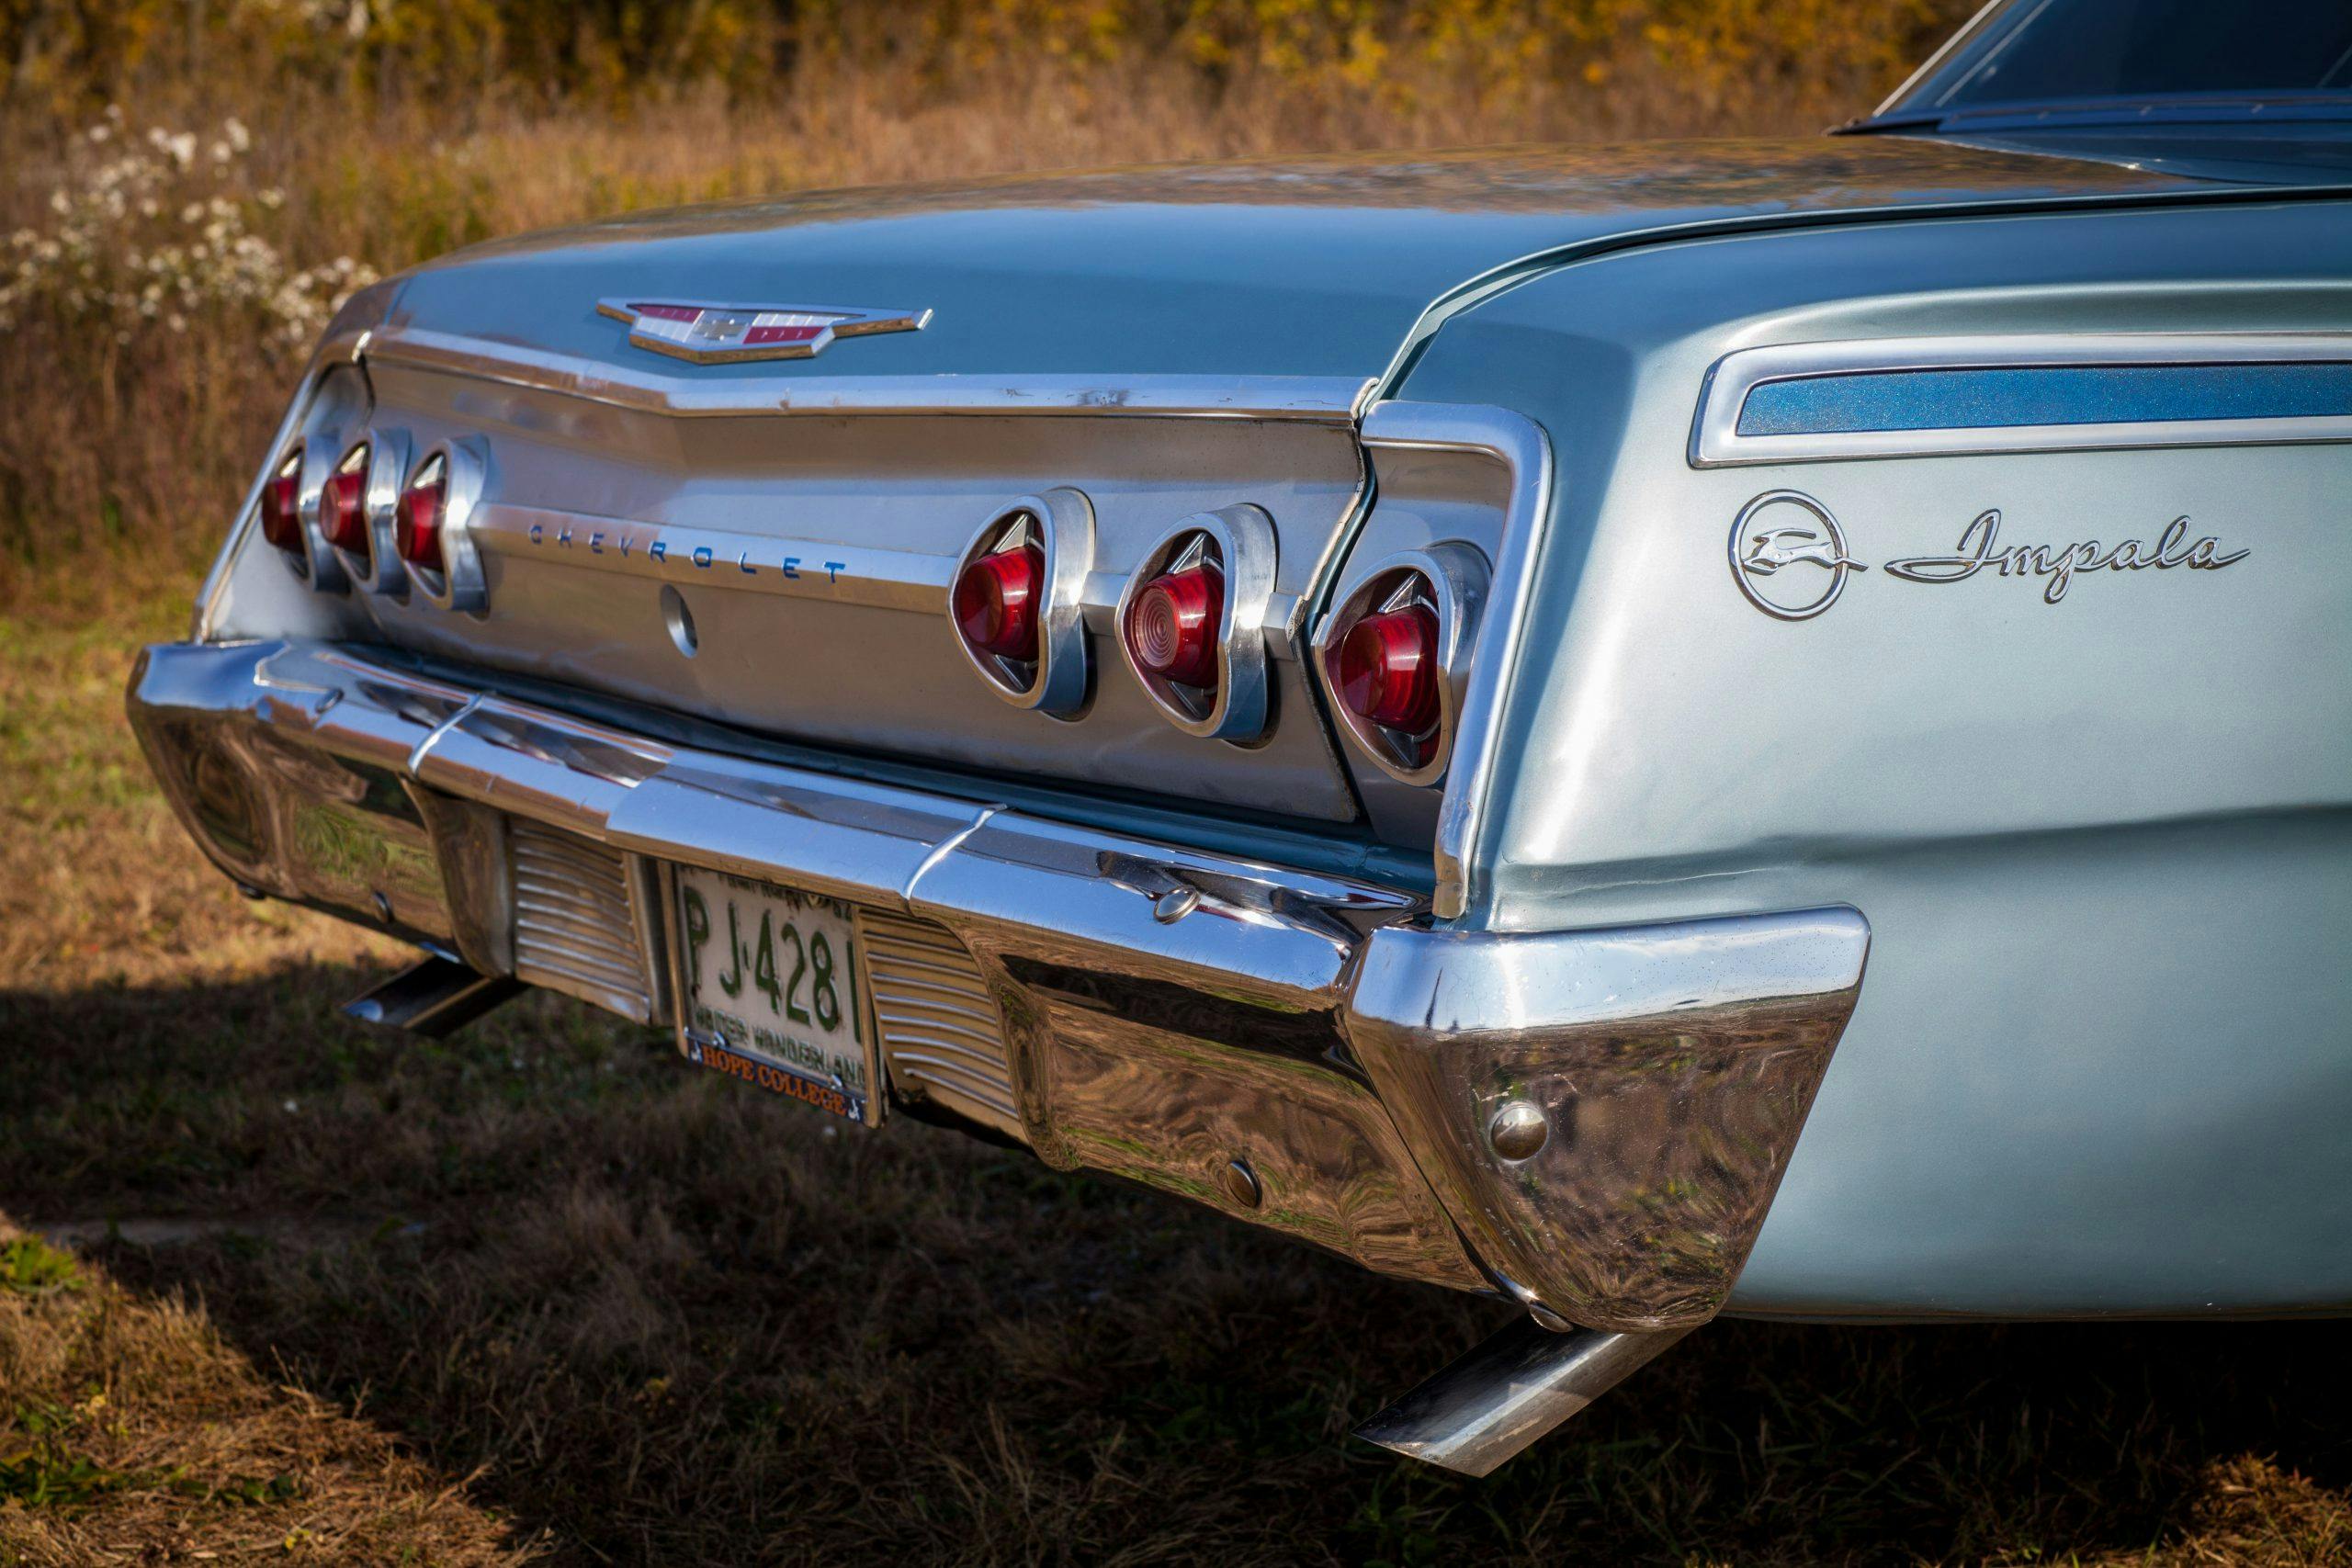 Jason Prince - 1962 Chevrolet Impala - close-up rear